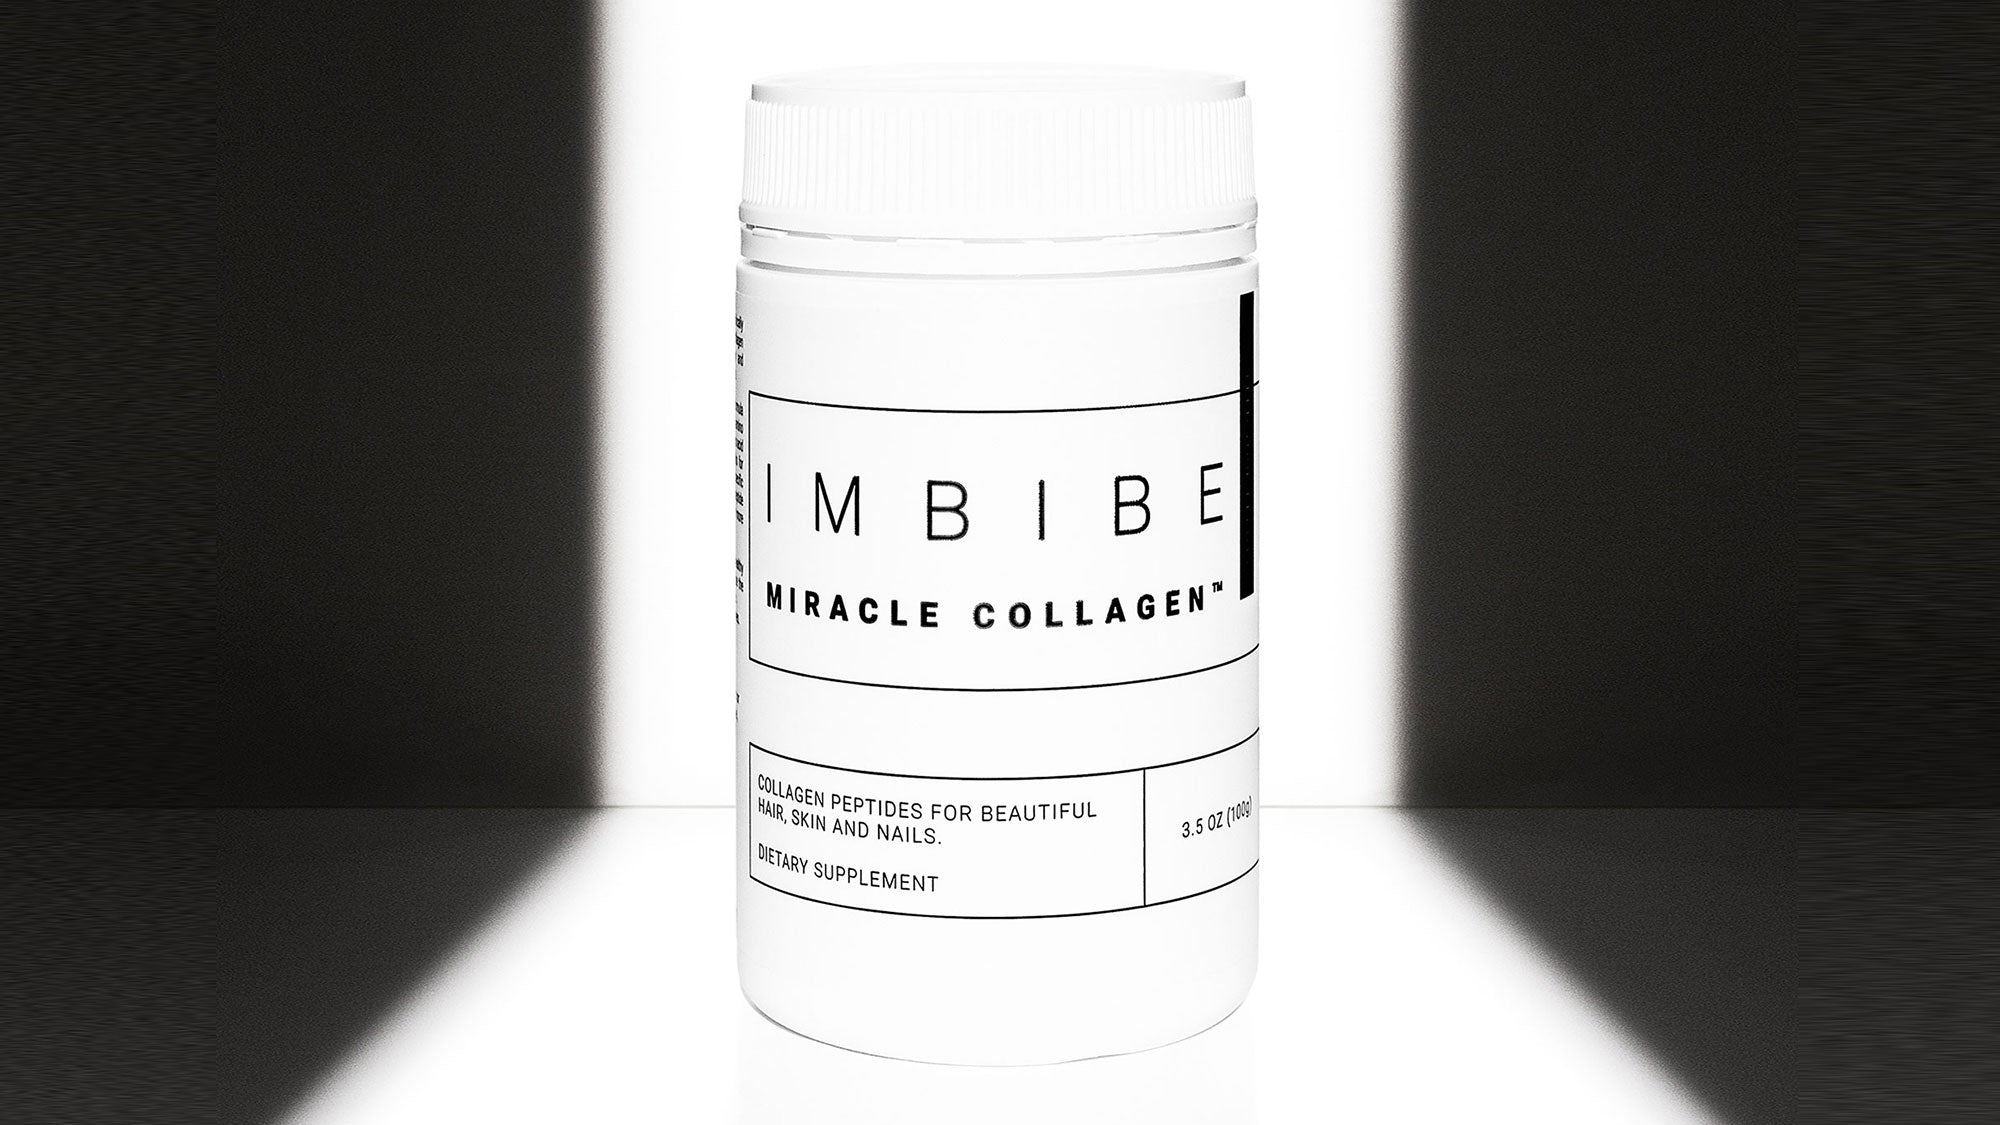 Miracle Collagen - I M B I B E